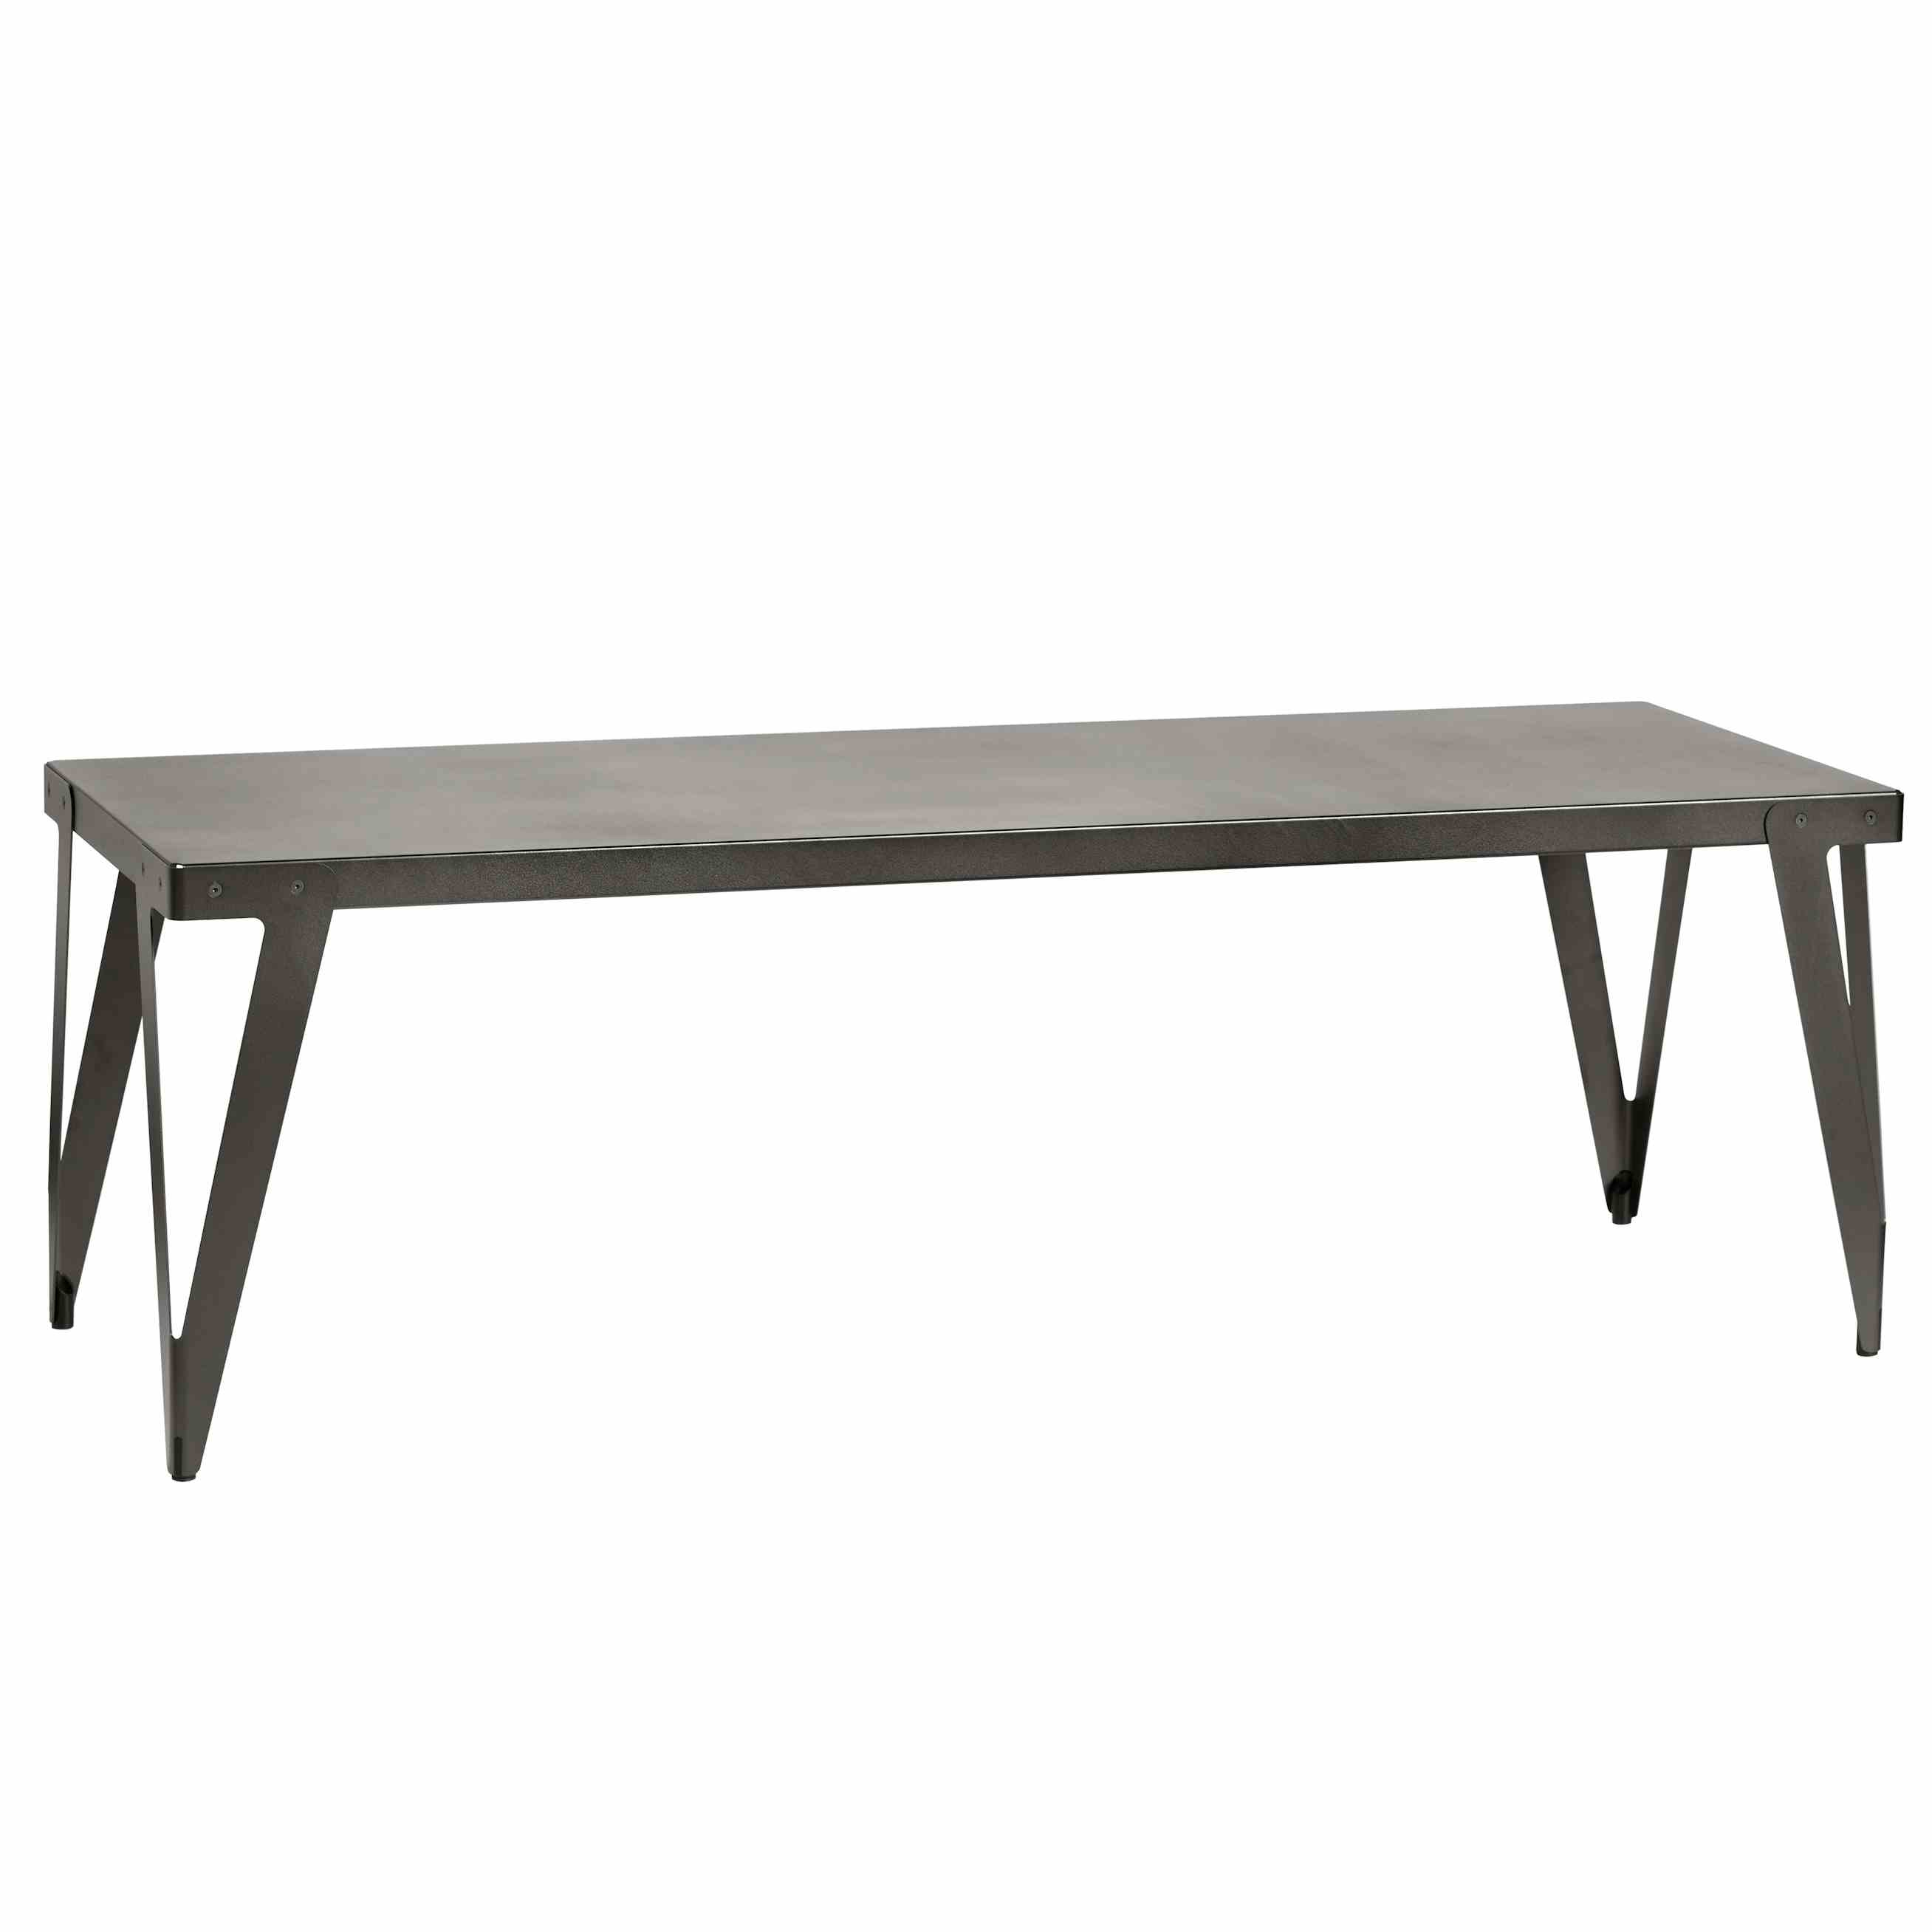 Functionals rectangular black lloyd dining table haute living thumb 2020 07 29 225615